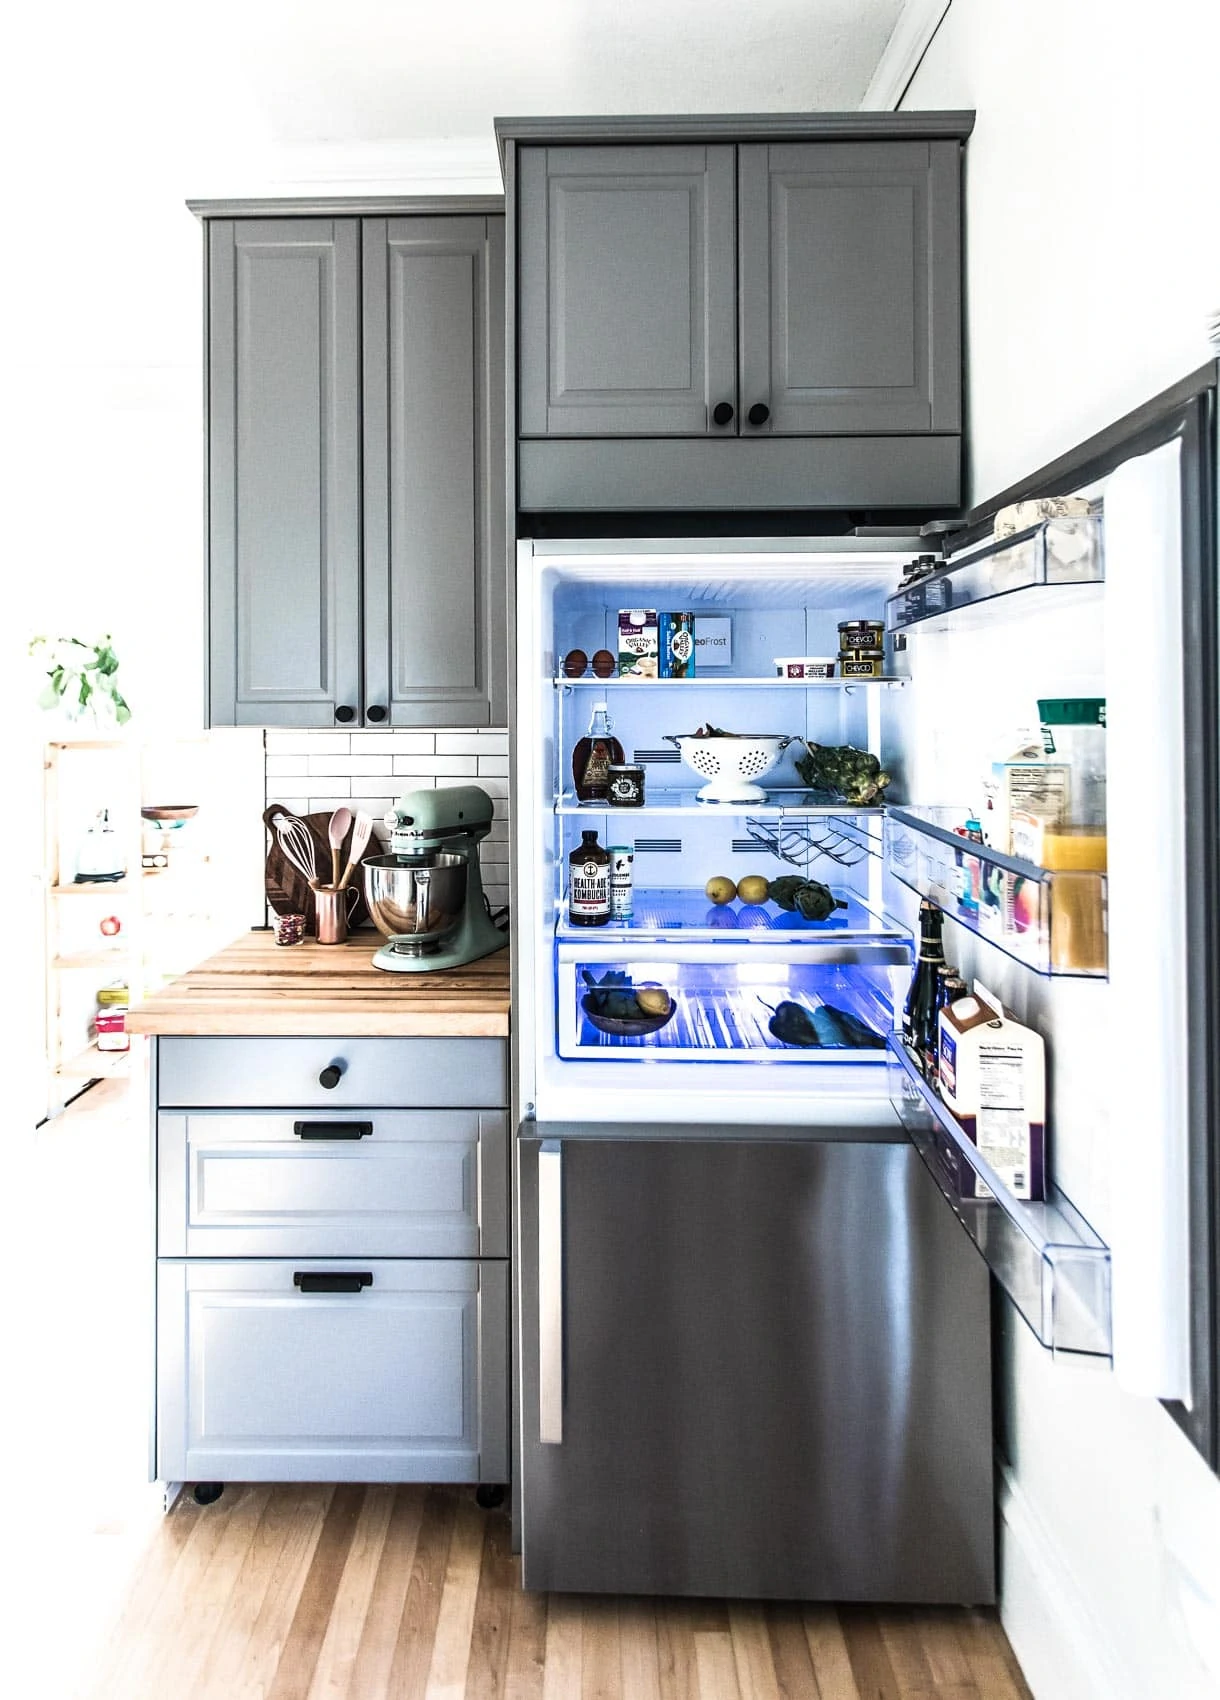 Beko Refrigerator in Kitchen Remodel